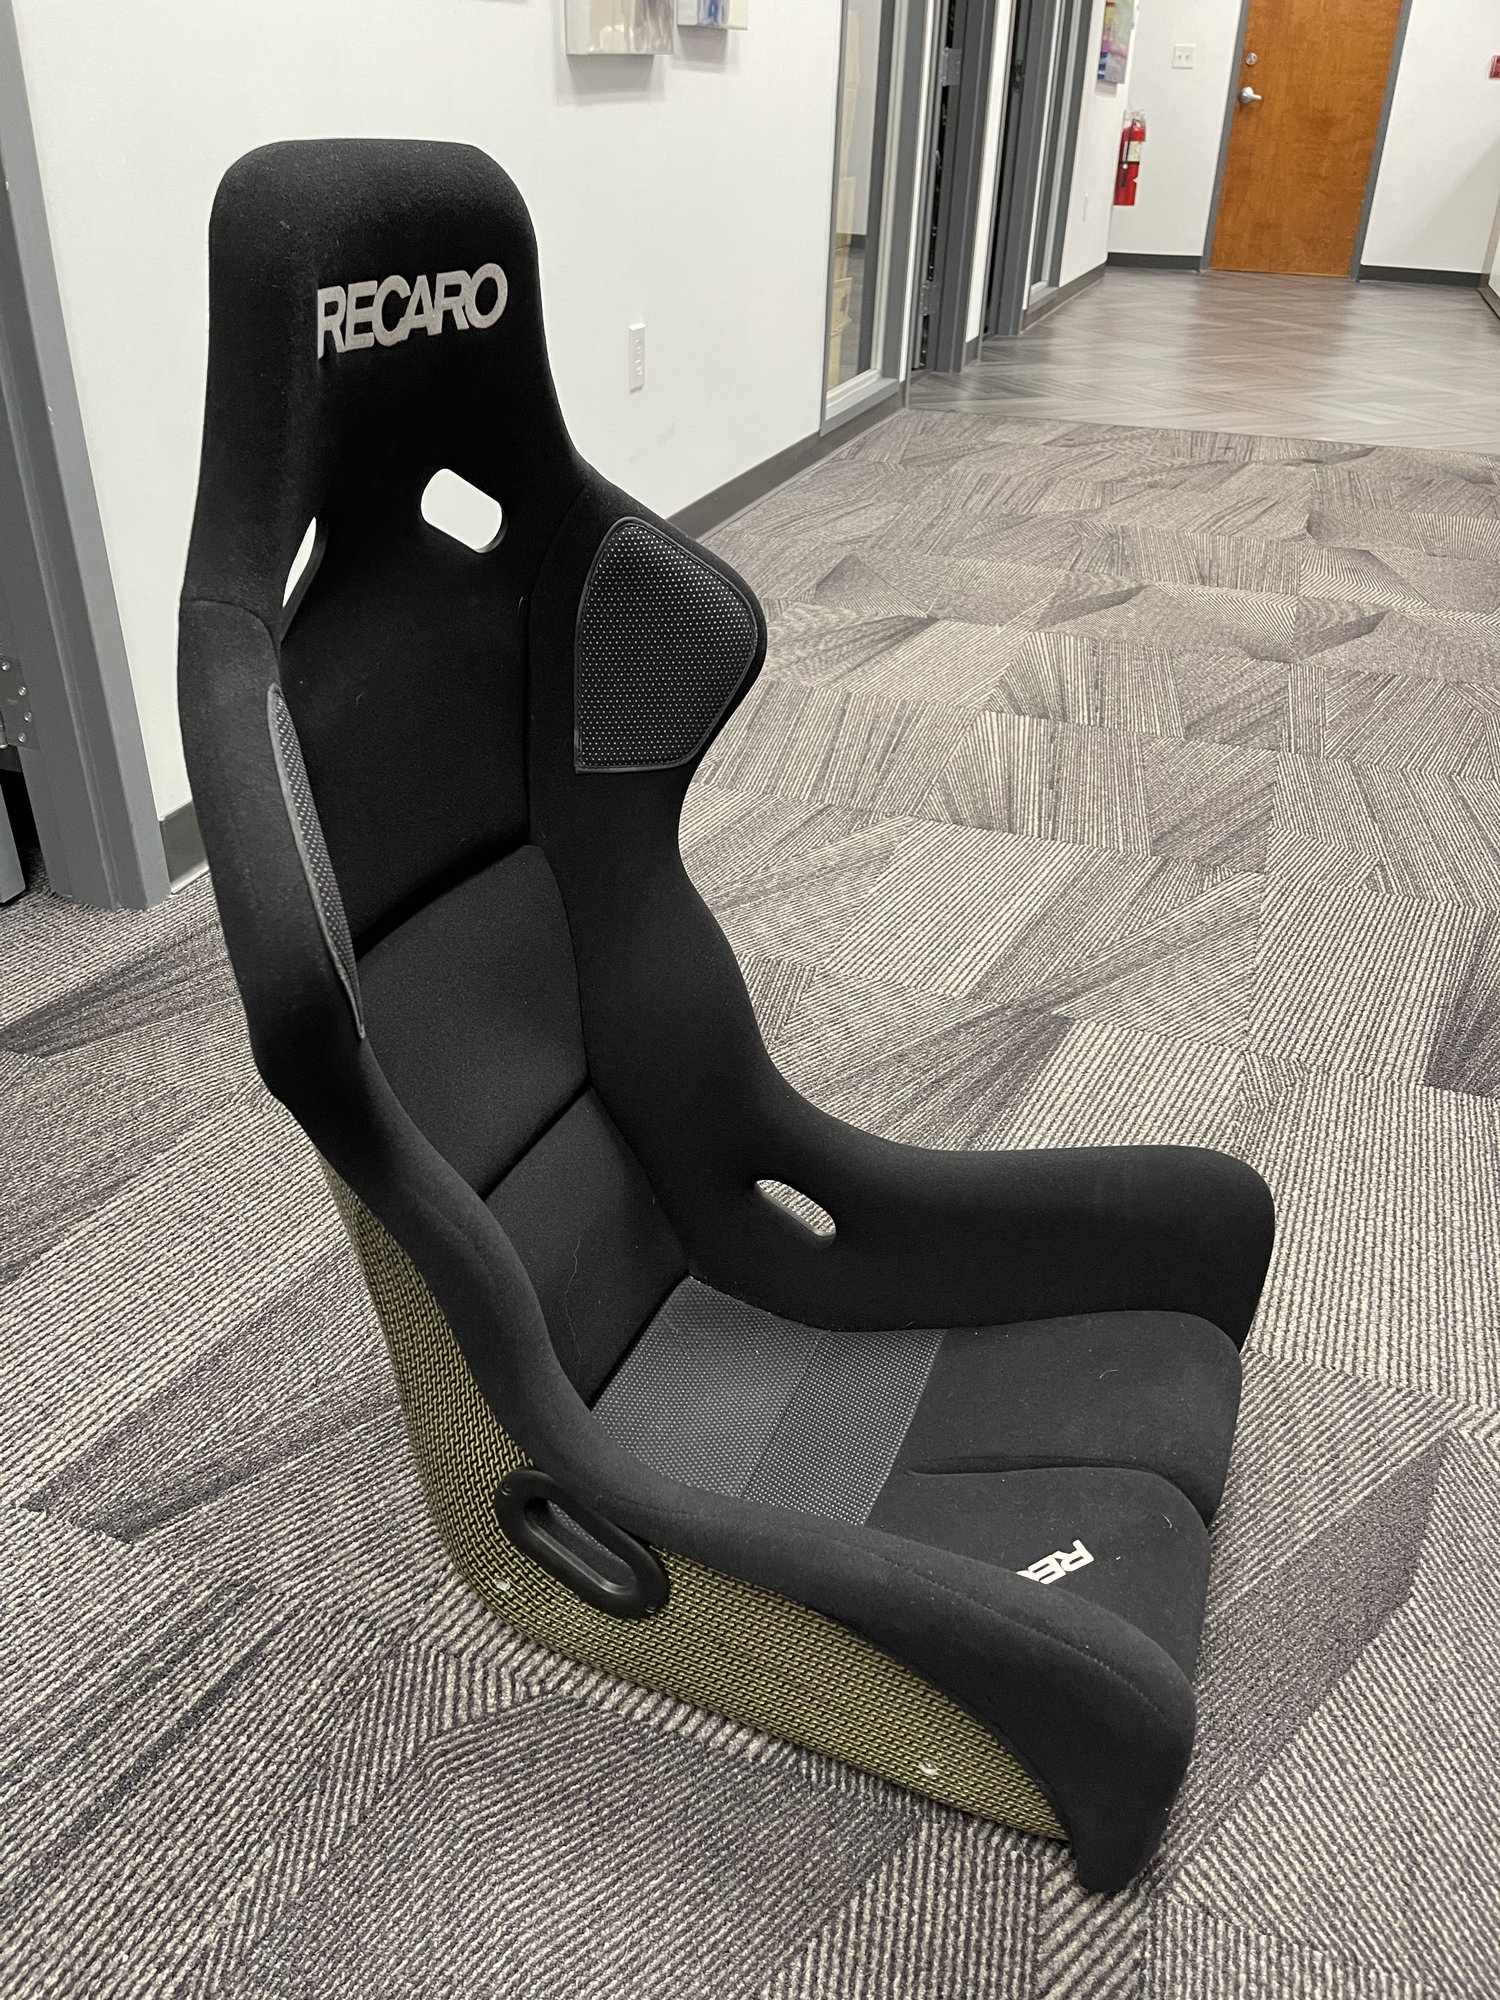 Interior/Upholstery - RECARO PROFI SPA CARBON KEVLAR SEAT & RECARO PROFI SPG BLK SEAT BUNDLE - Used - 2012 to 2016 Porsche Cayman - Orlando, FL 32807, United States